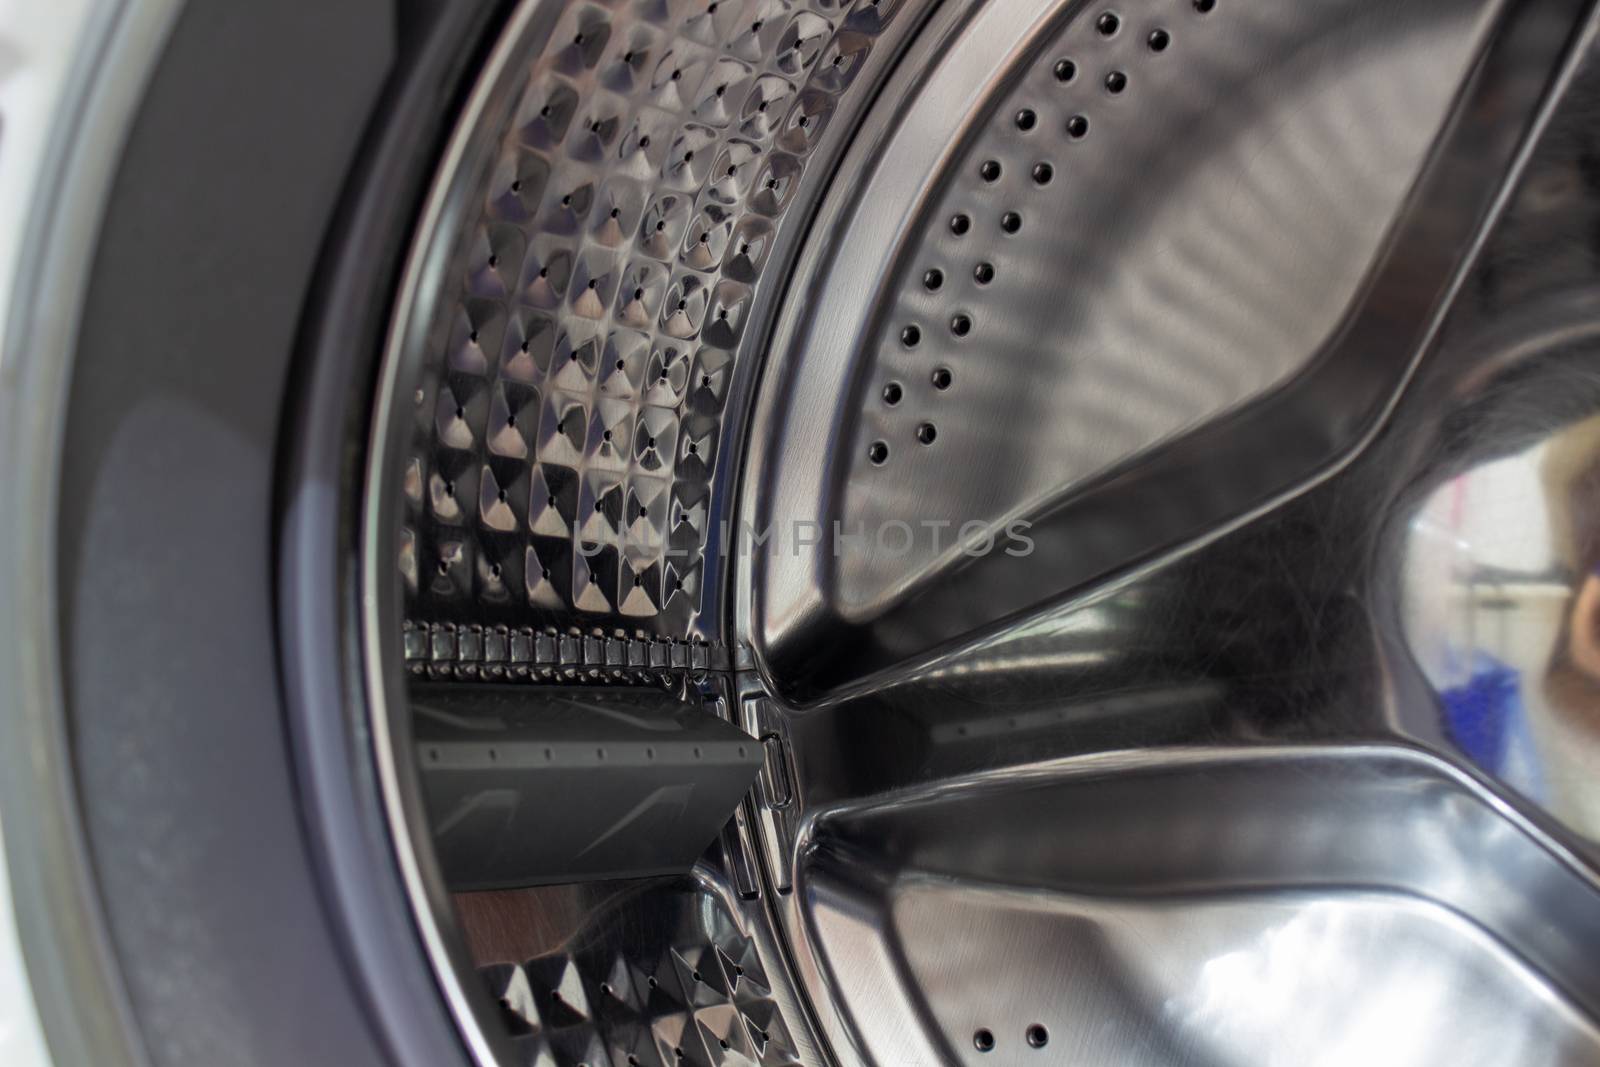 The drum of the washing machine. Details of the washing machine by AnatoliiFoto